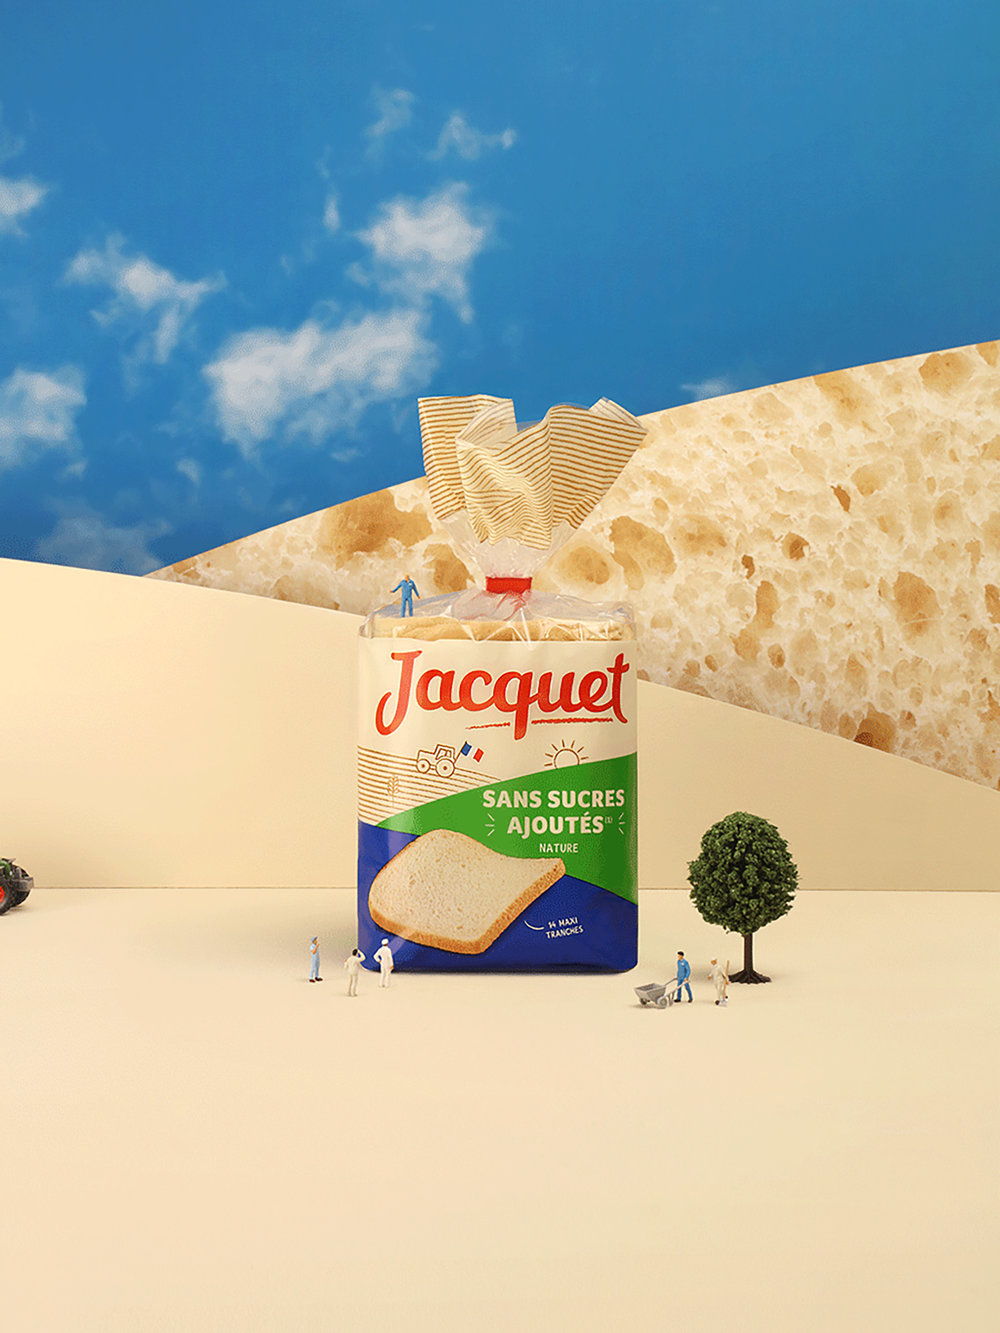 jacquet-packaging-animation-ssa-900x1200.jpg